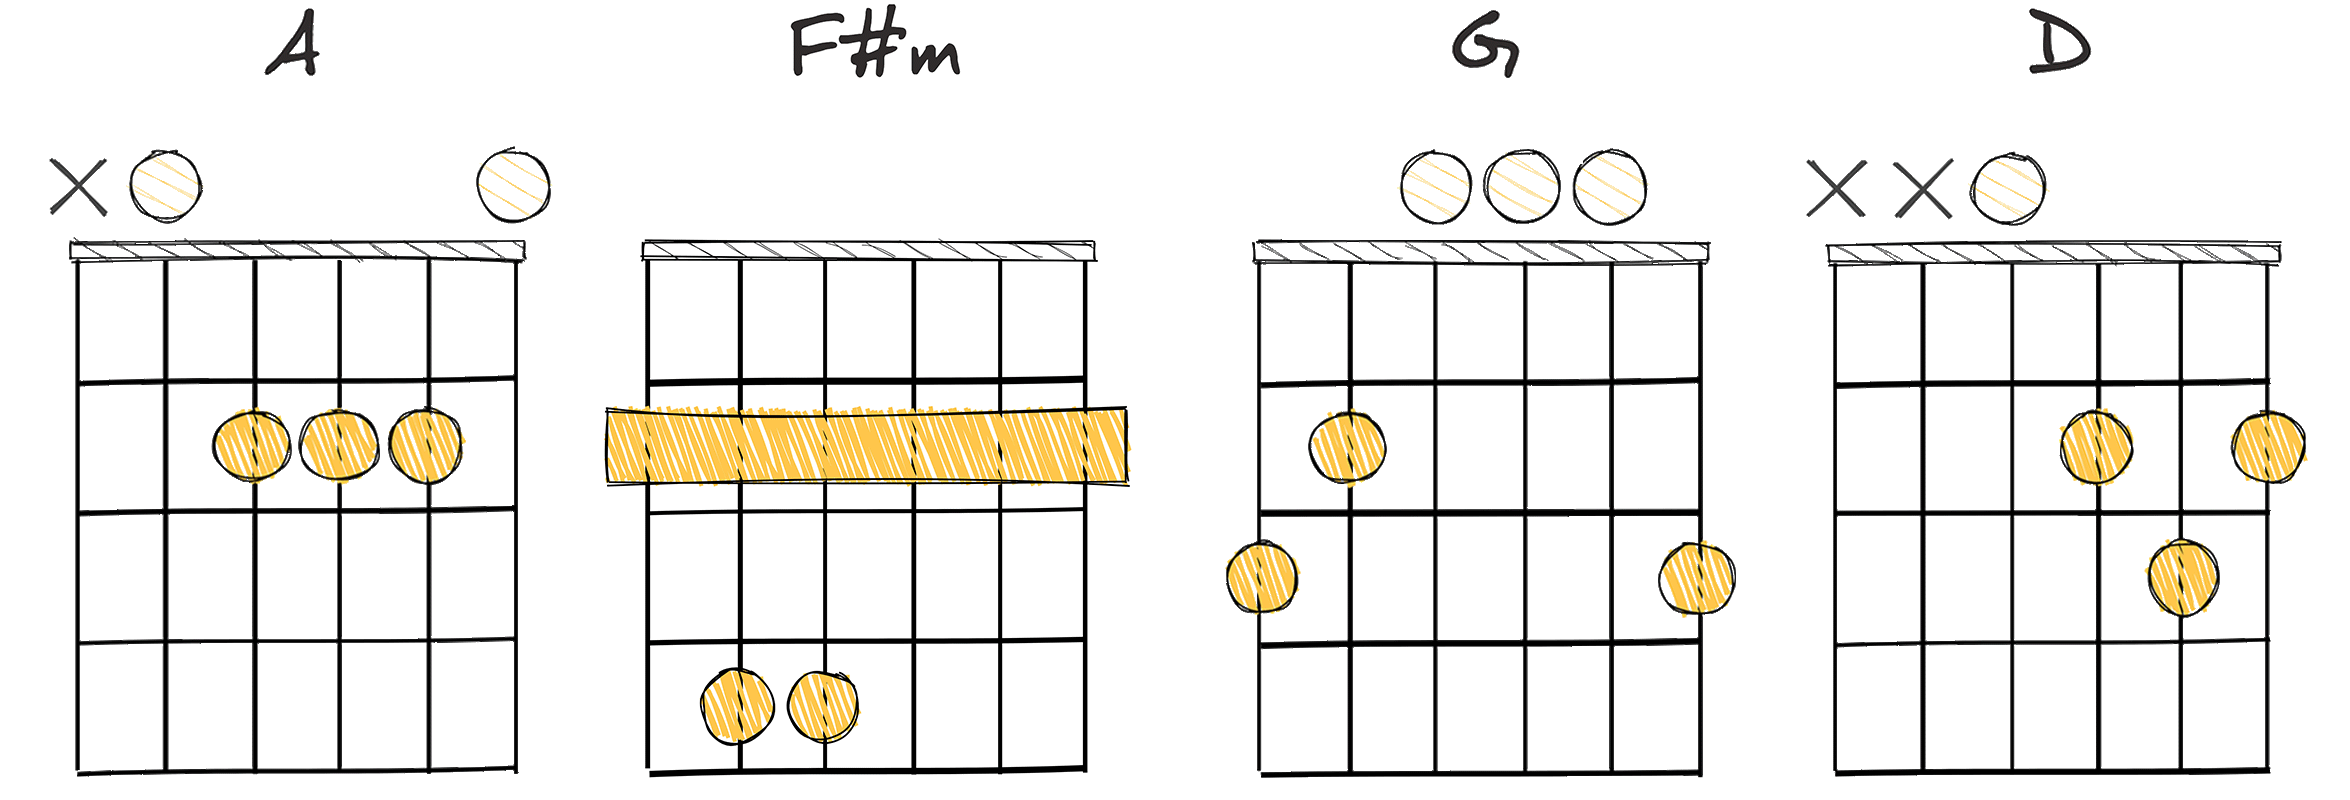 V-iii-IV-I (5-3-4-1) chords diagram